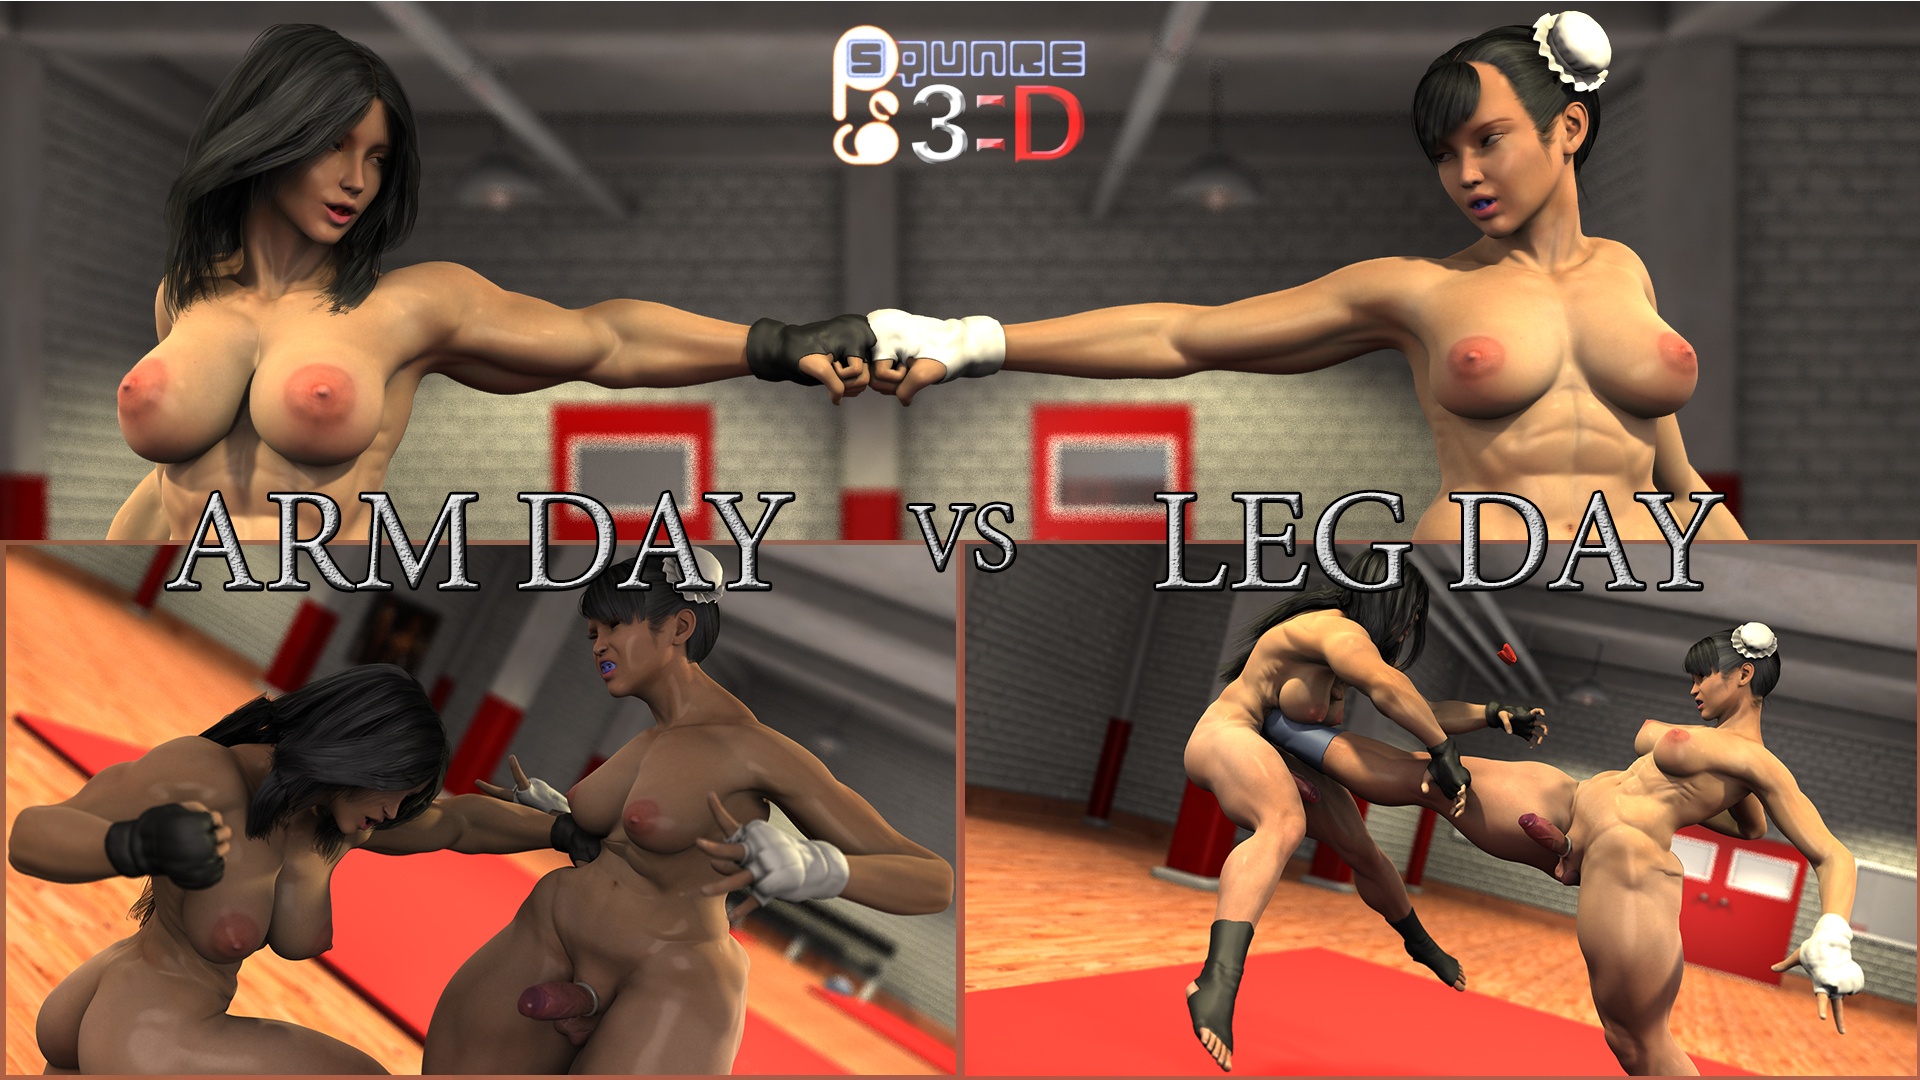 Squarepeg3D Arm Day vs Leg Day 3D Porn Comic